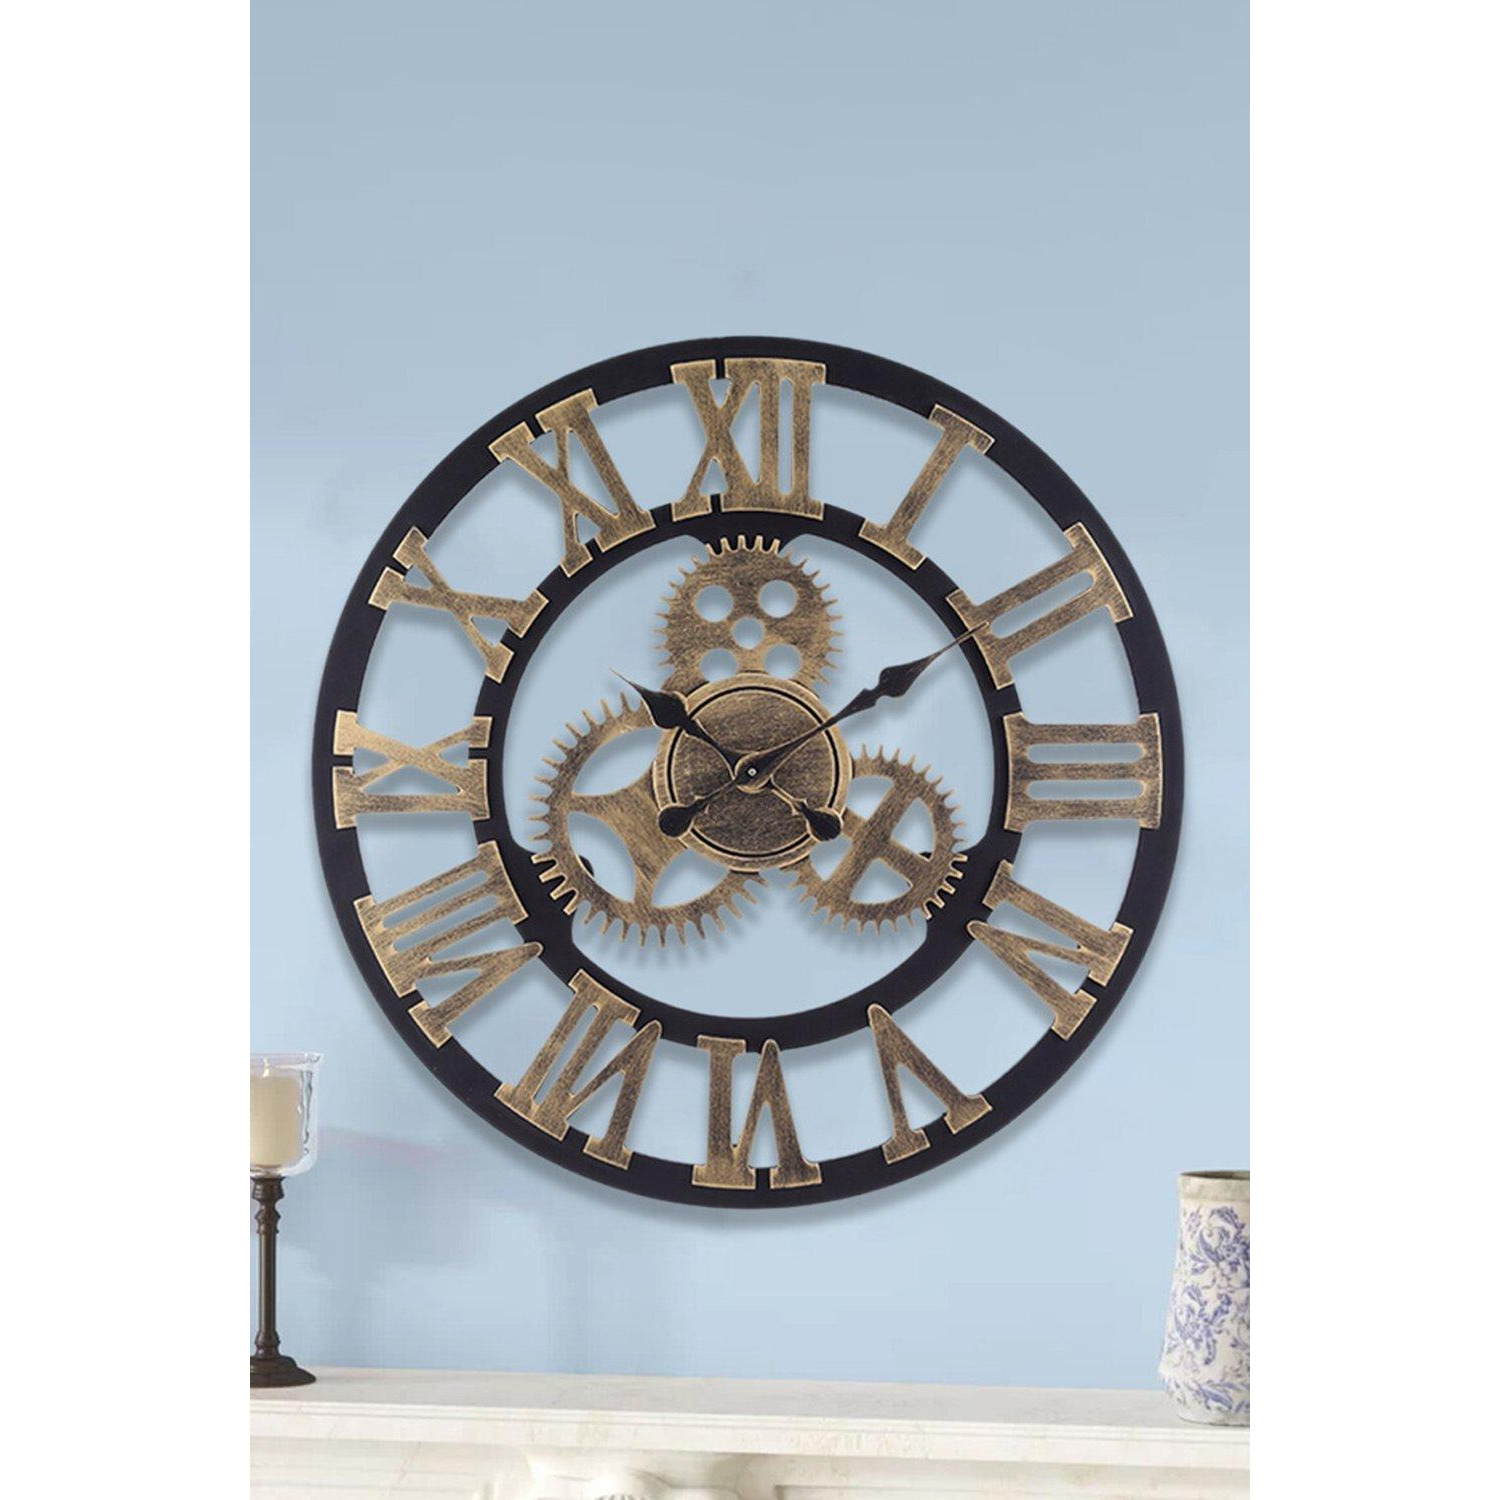 58cm Dia Industrial Gear Roman Numeral Wall Clock - image 1